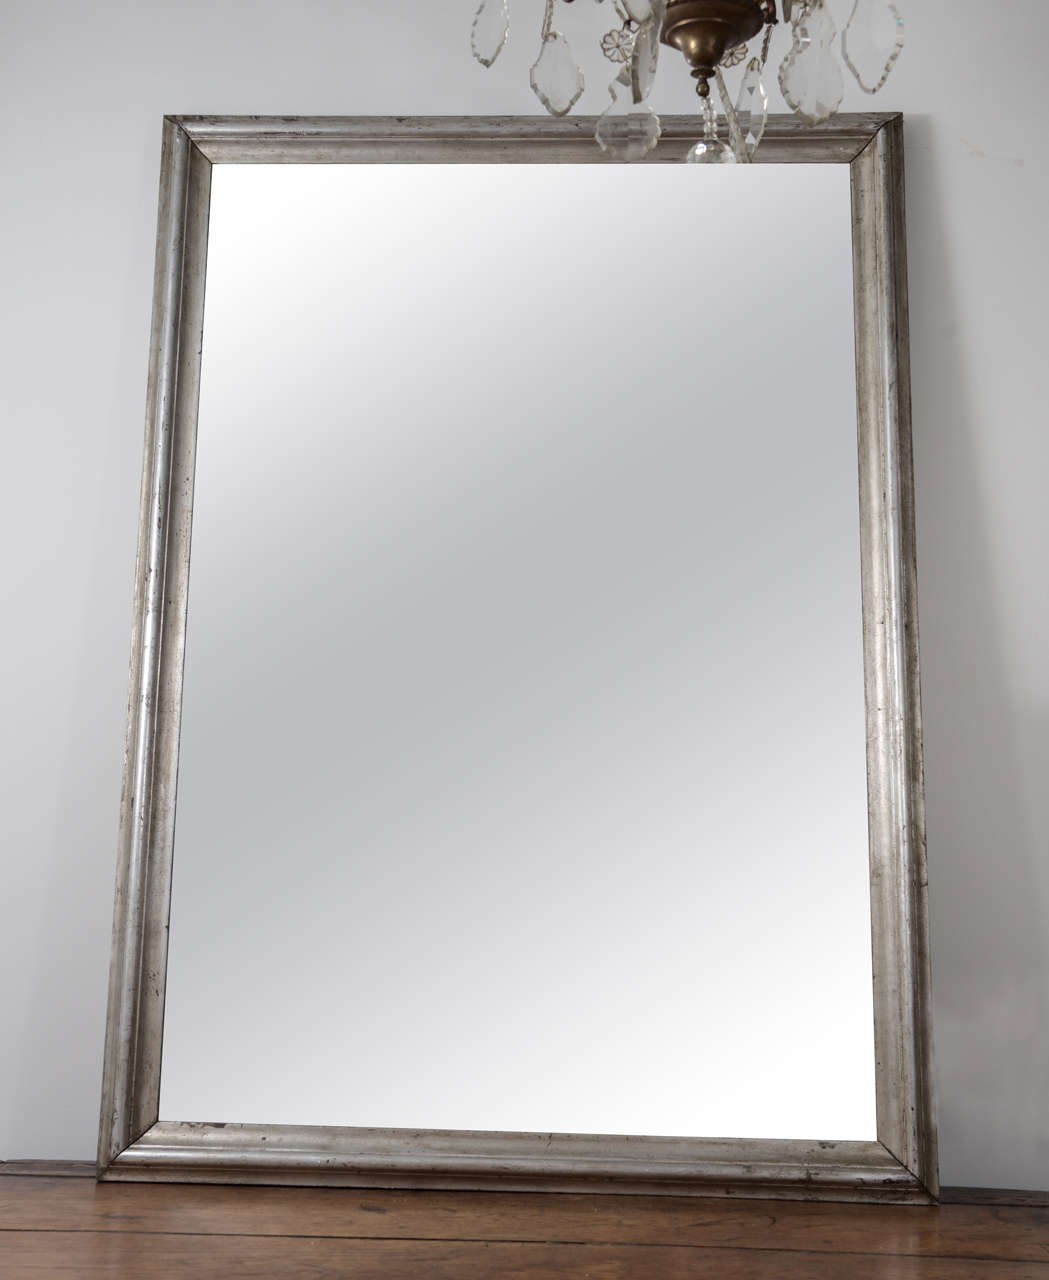 19th century mirror with silver leaf frame.